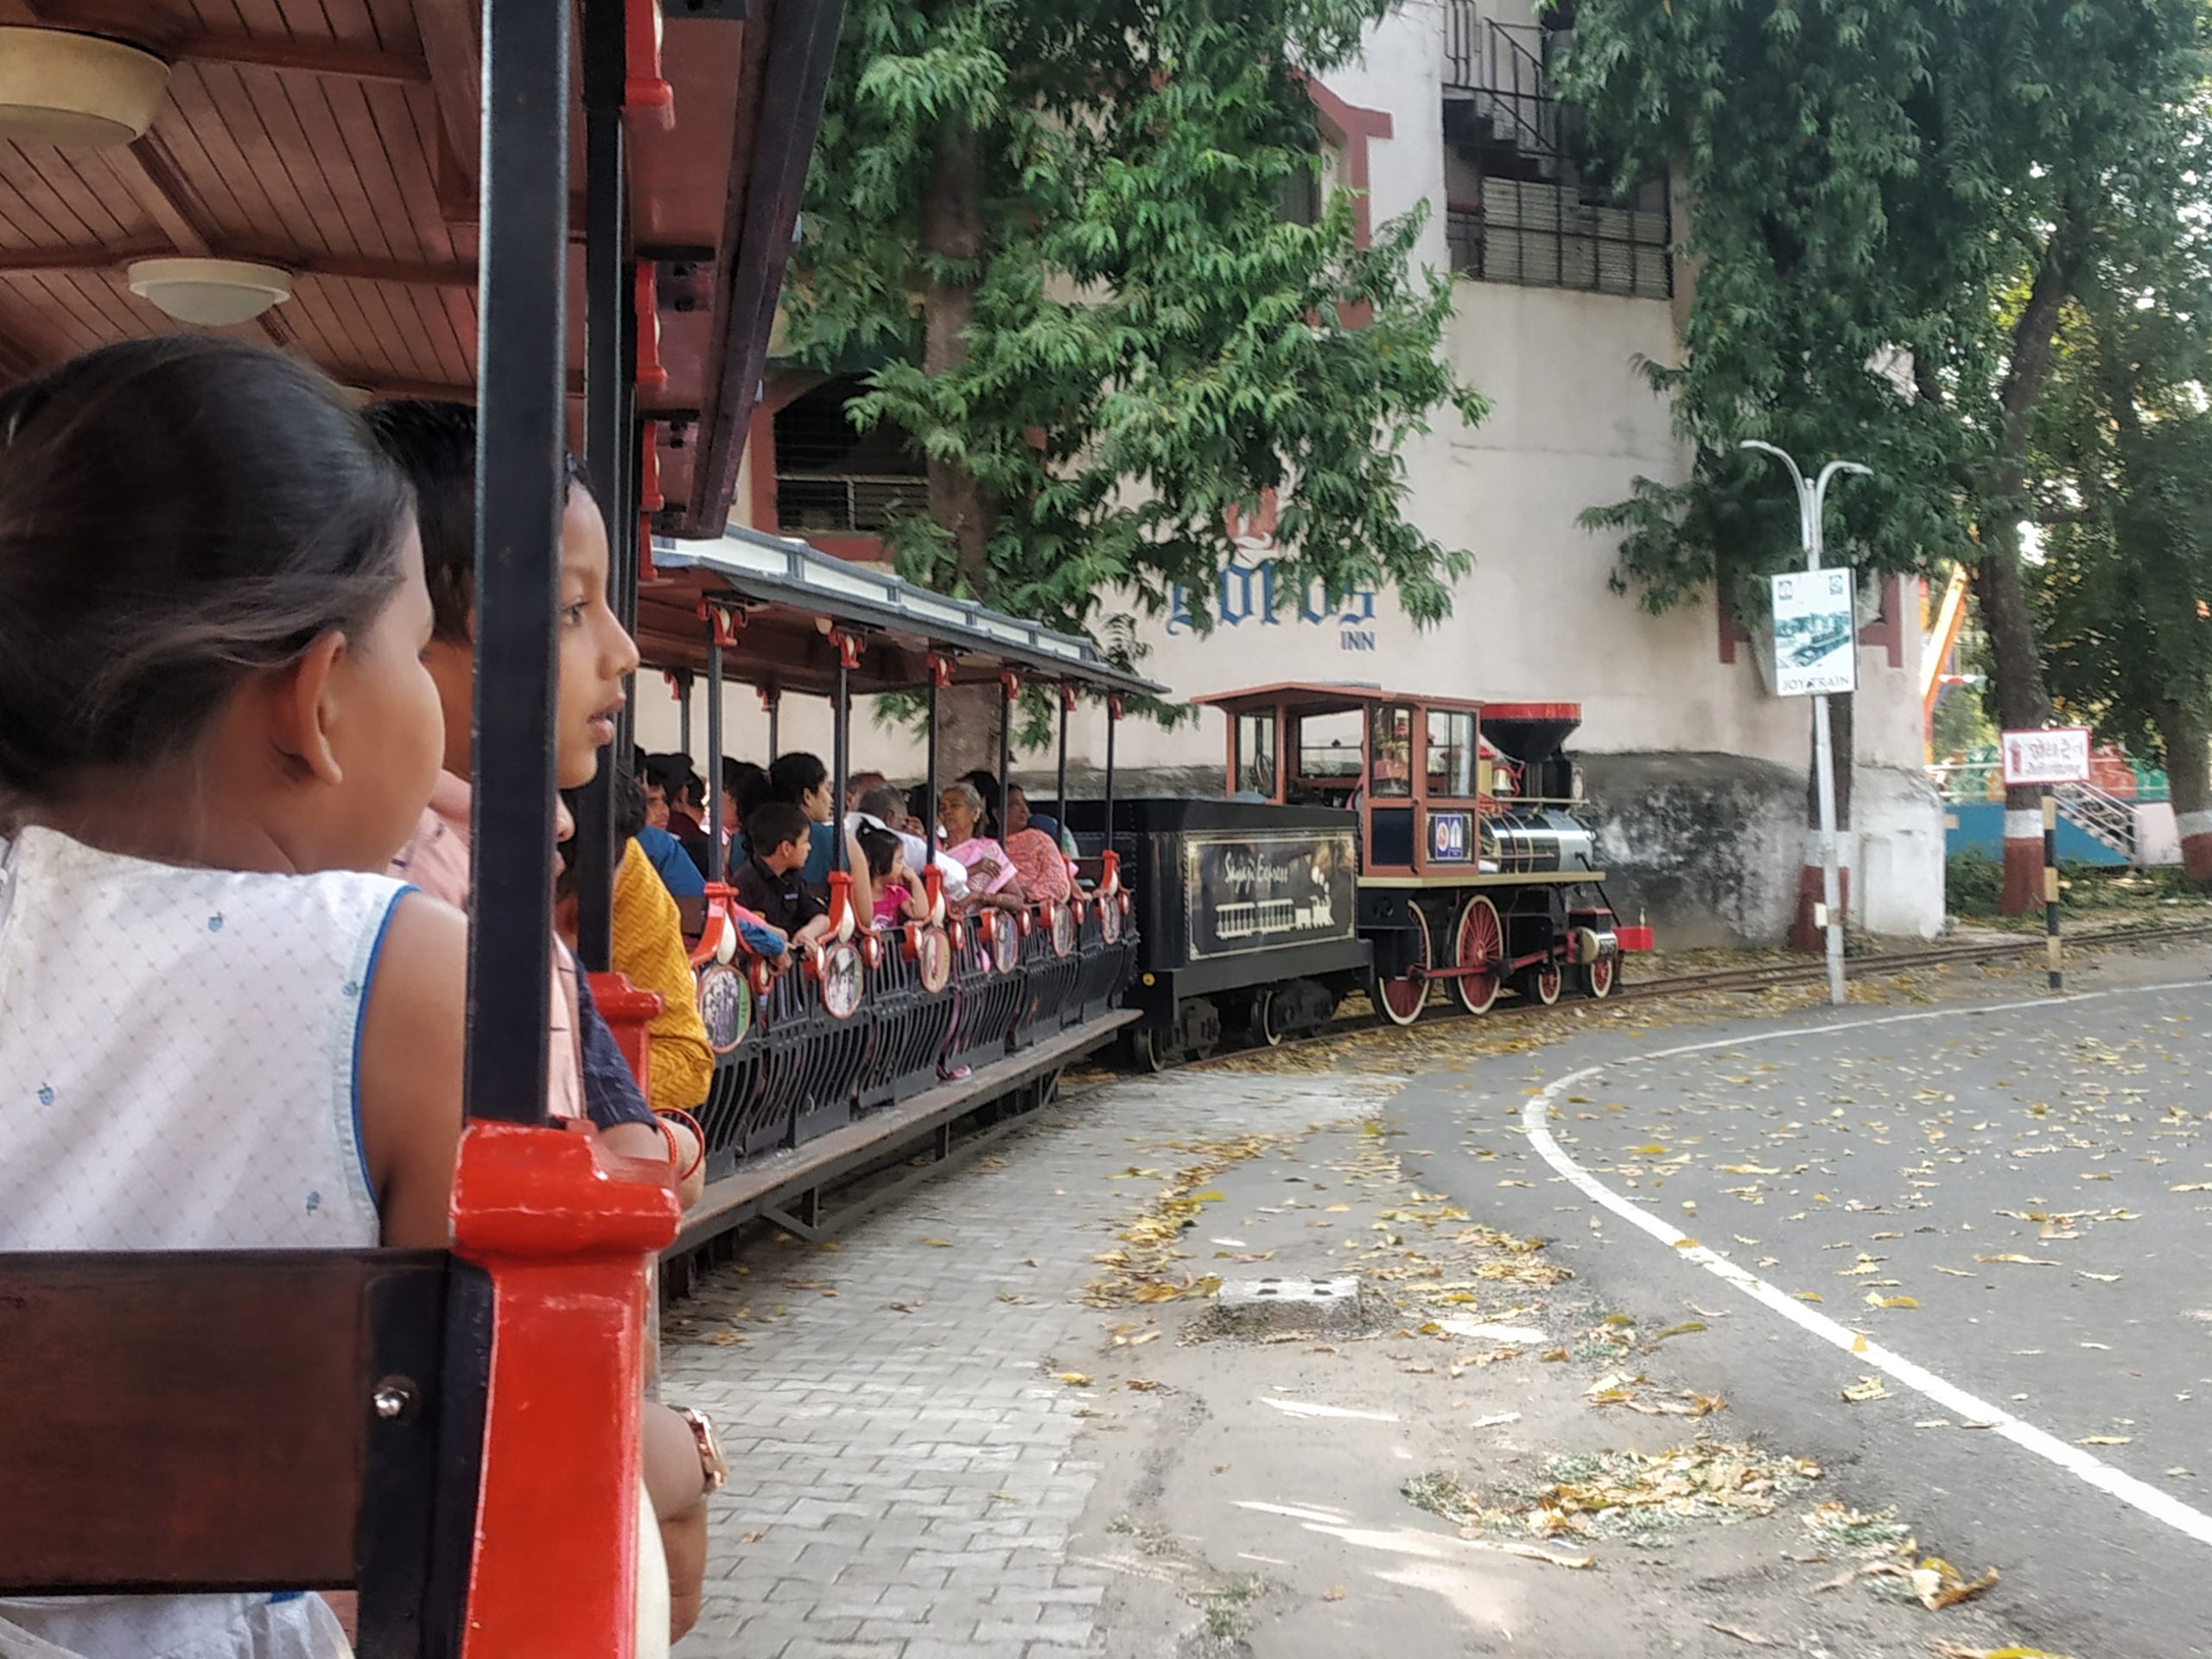 An Toy Train Ride at Sayagi Baug, Vadodara